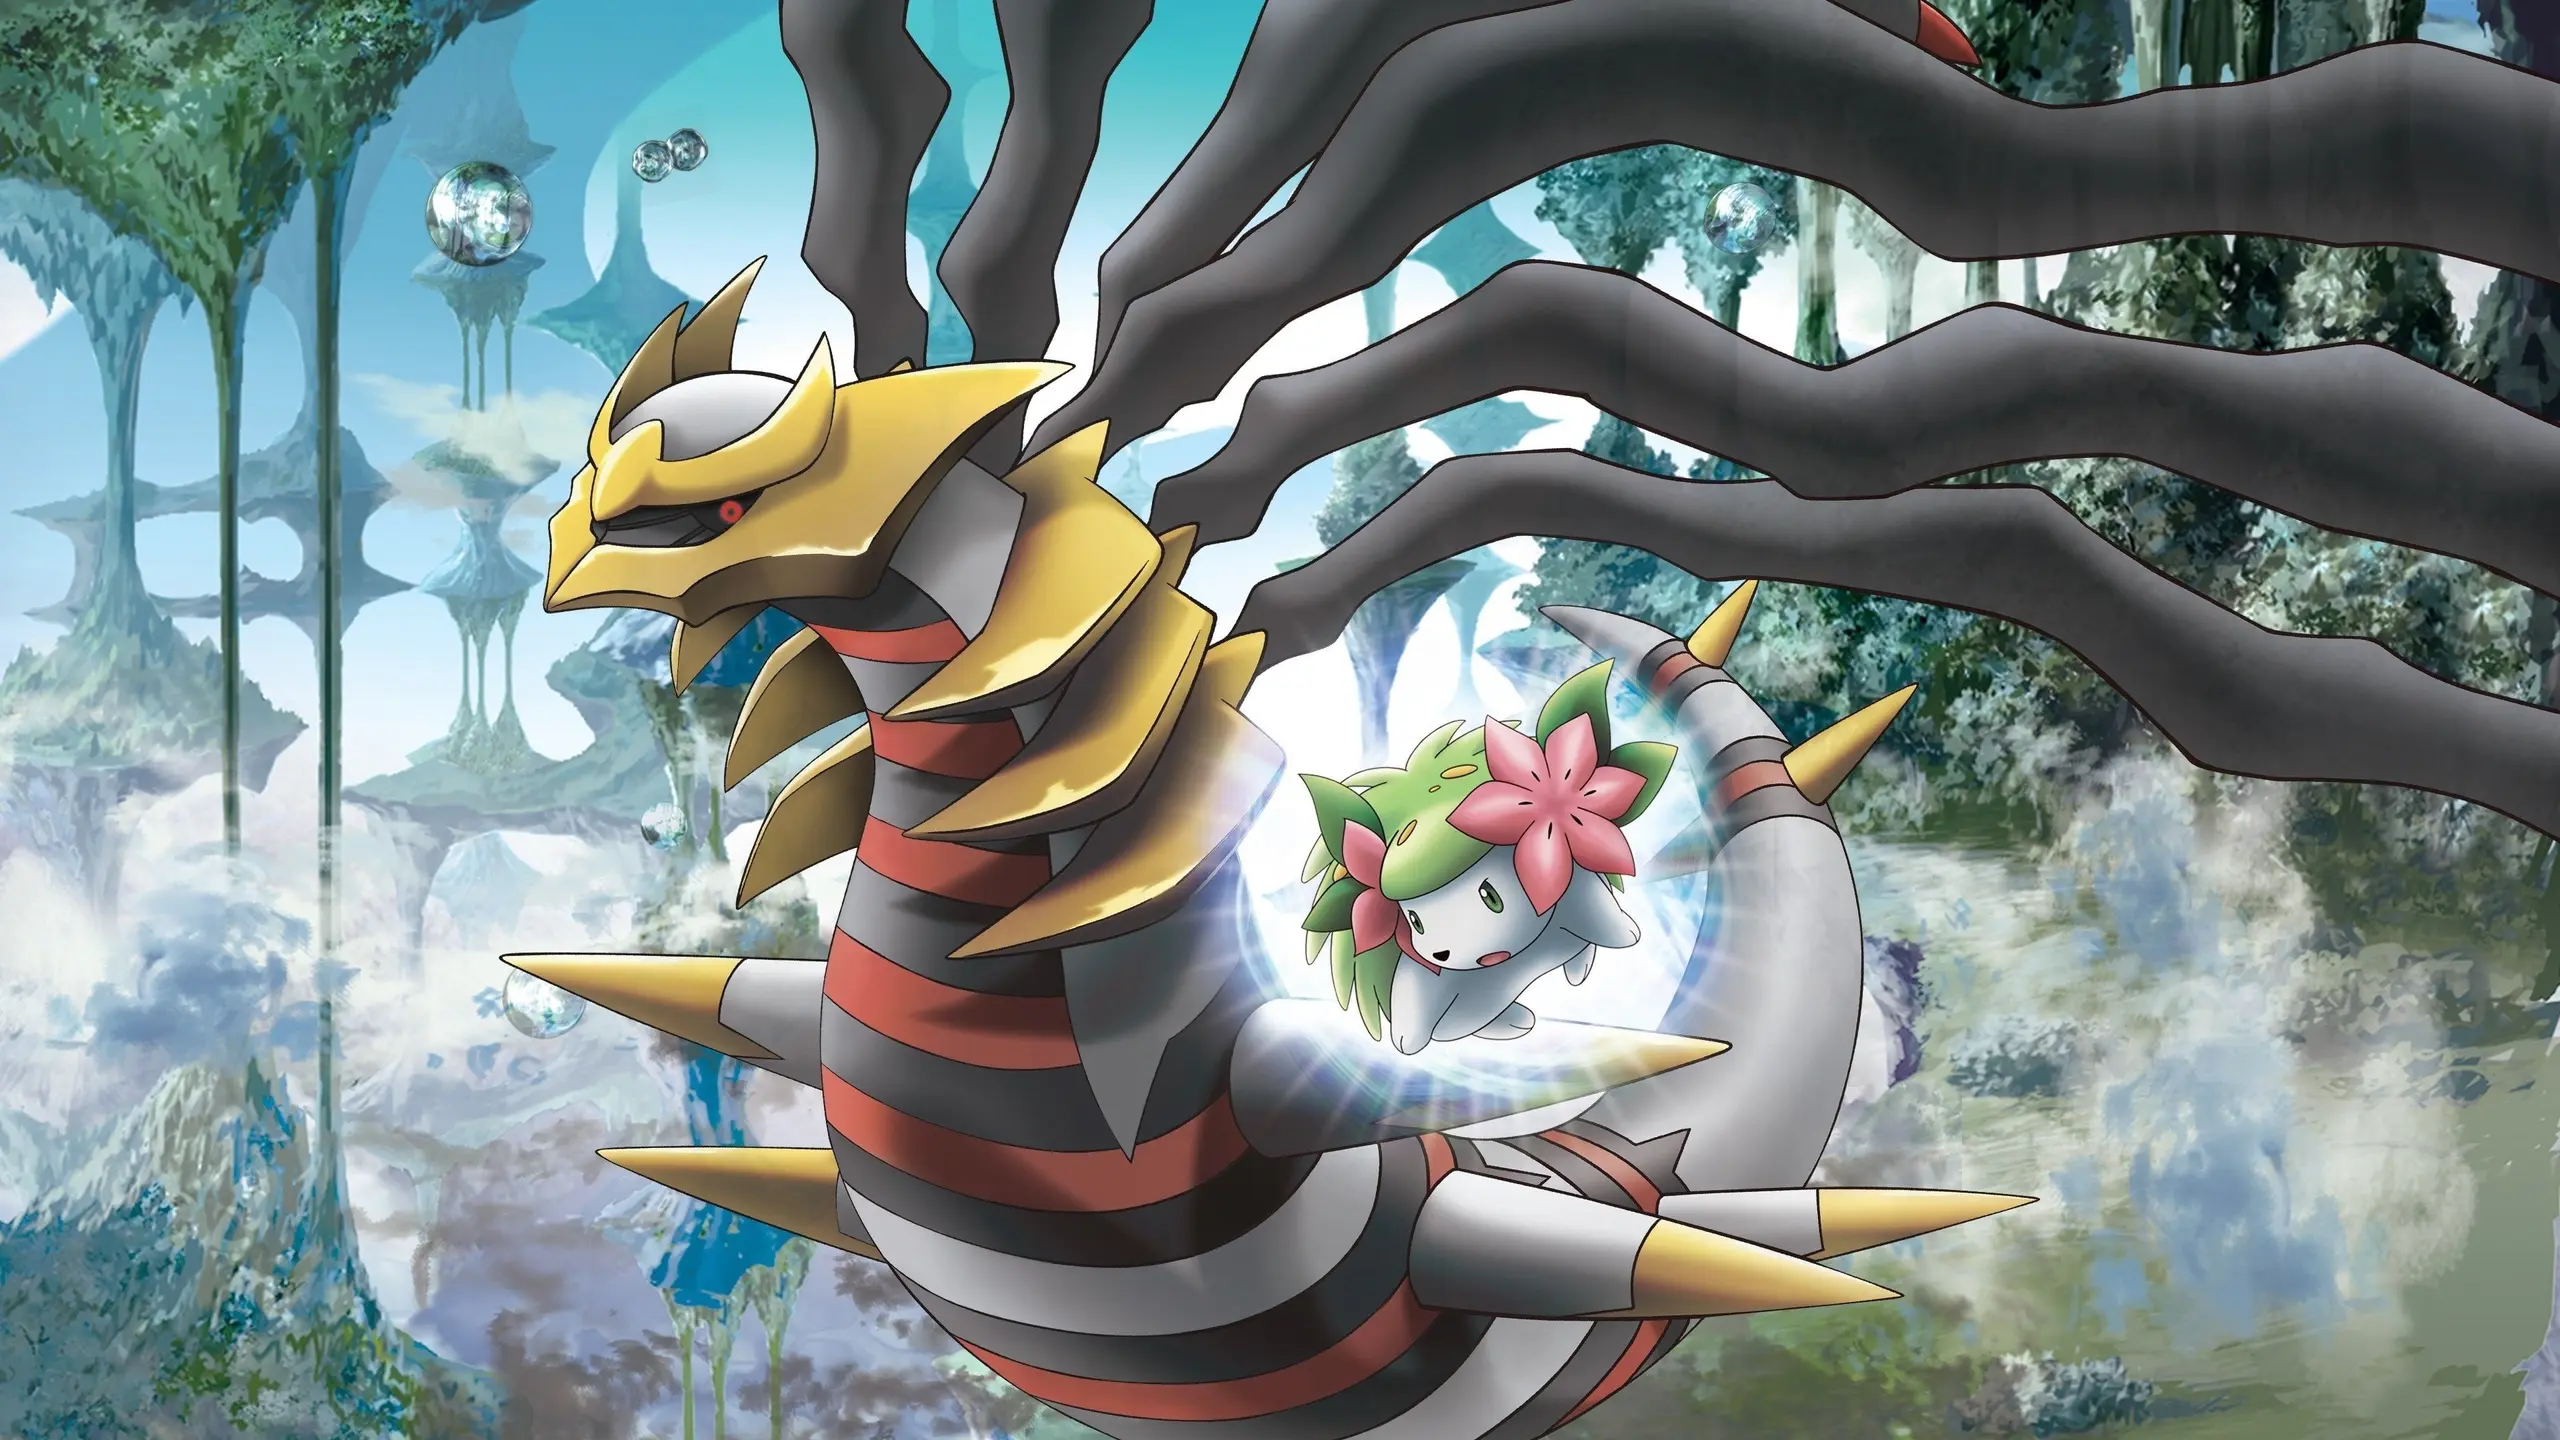 Pokémon 11: Giratina und der Himmelsritter